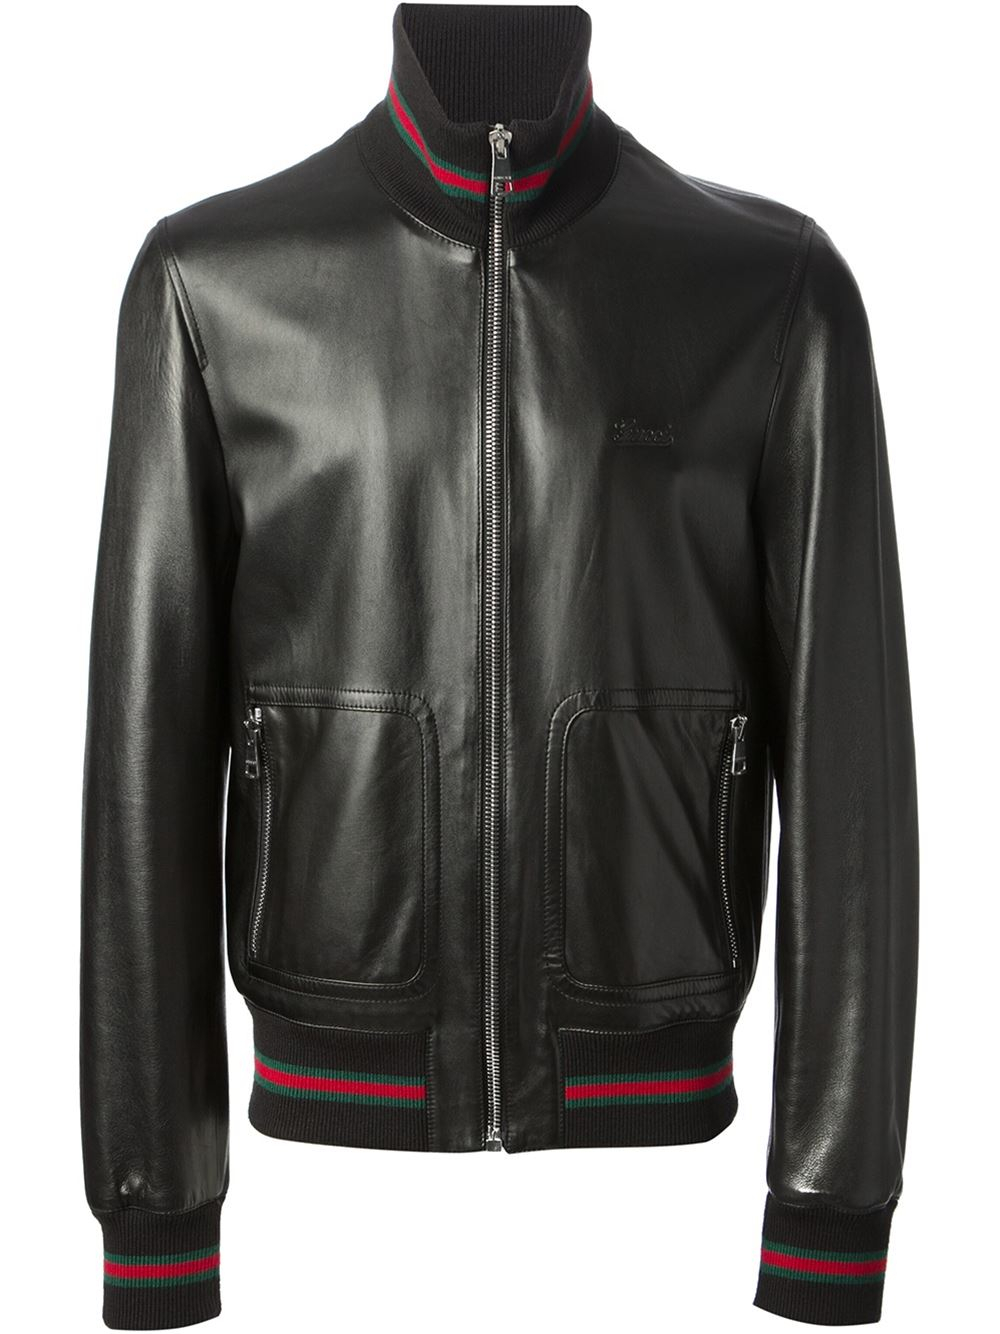 Lyst - Gucci Bomber Jacket in Black for Men